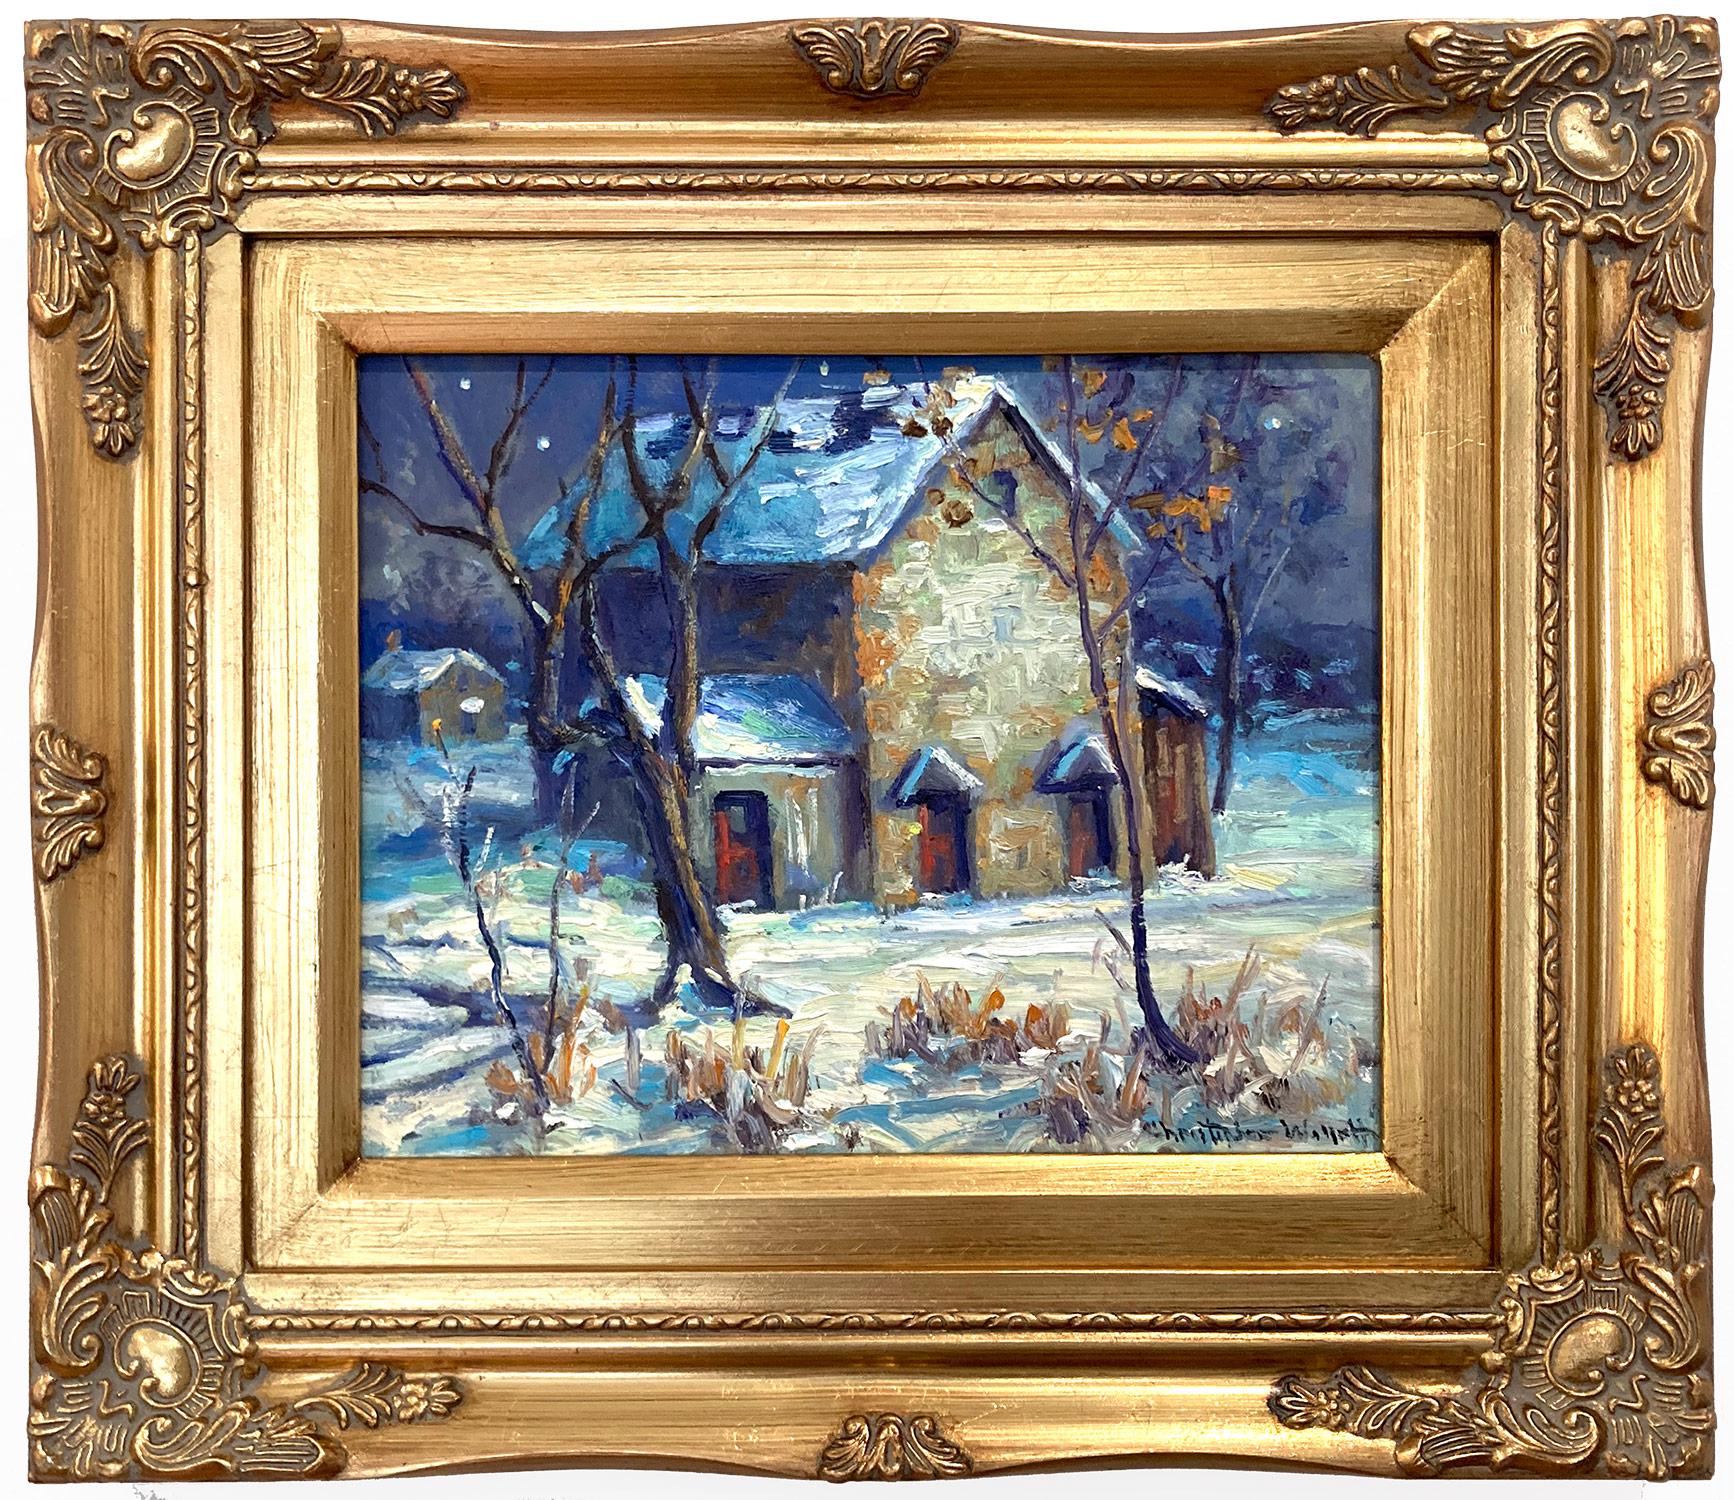 Christopher Willett Figurative Painting - "Buckingham at Night" Bucks County PA Snow Scene Landscape Oil Painting 